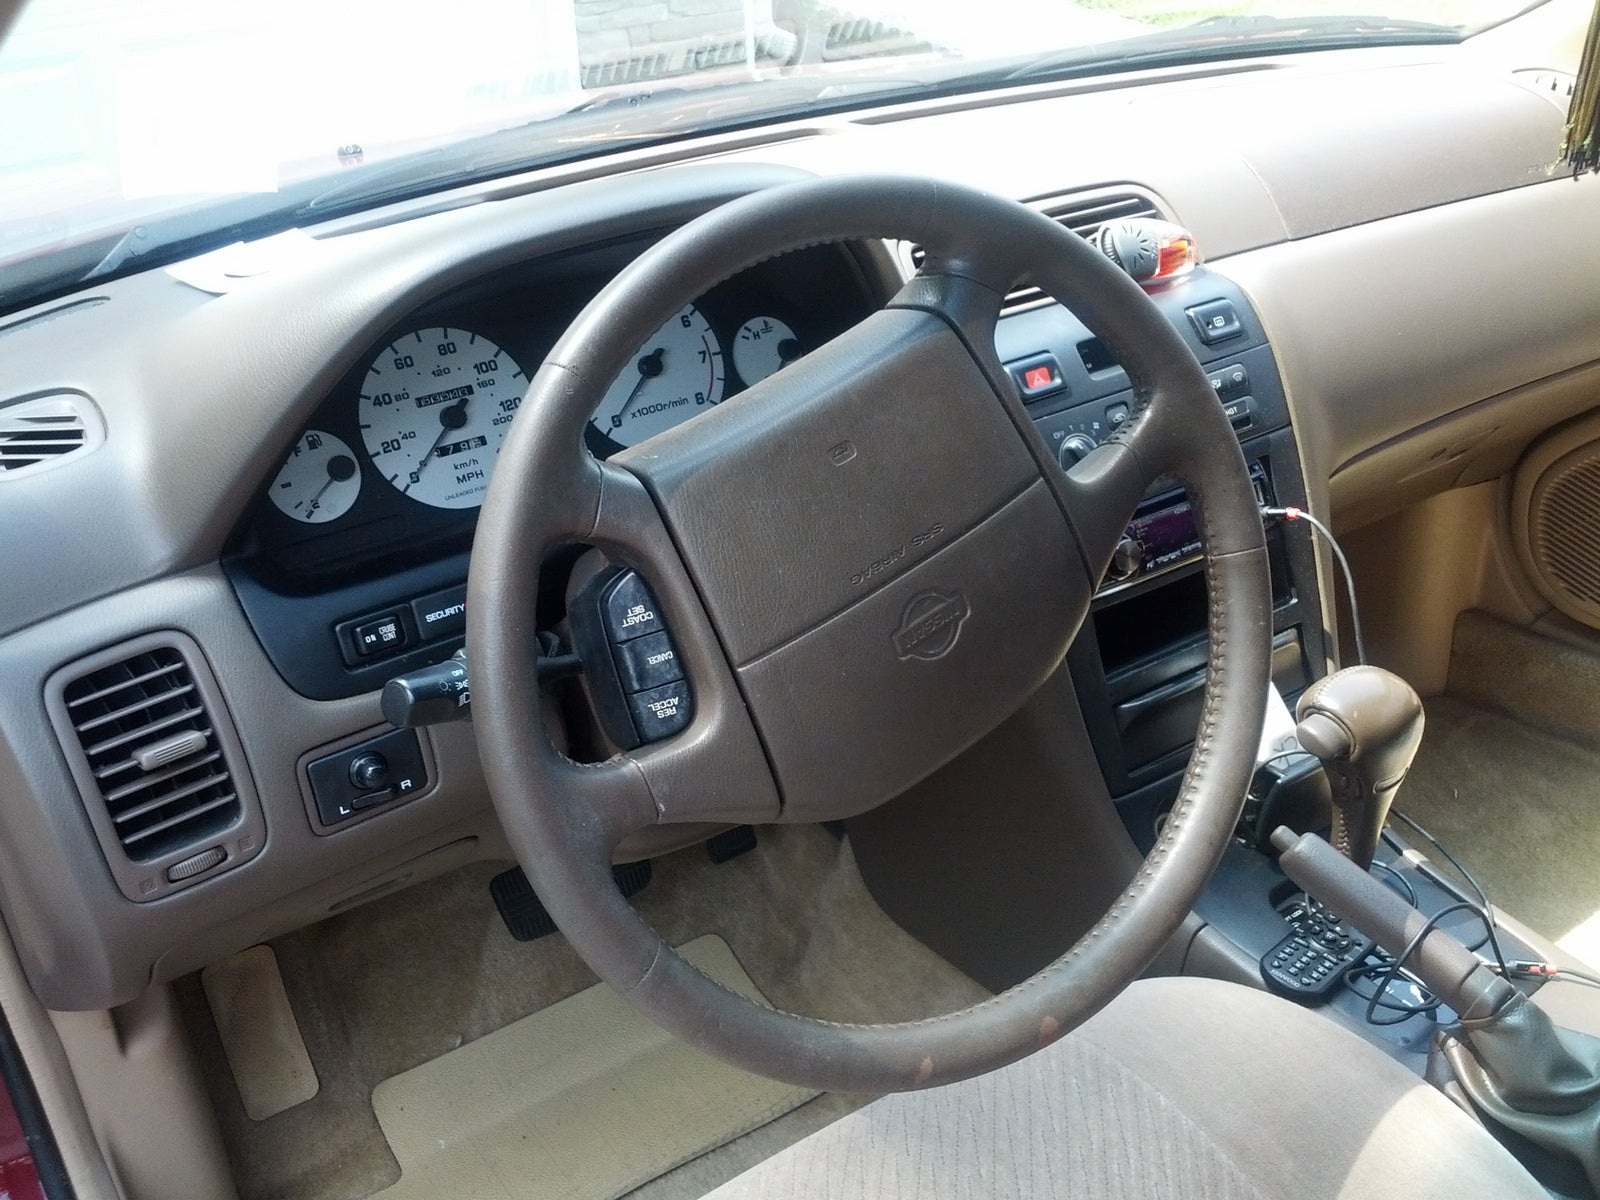 1996 Nissan maxima interior